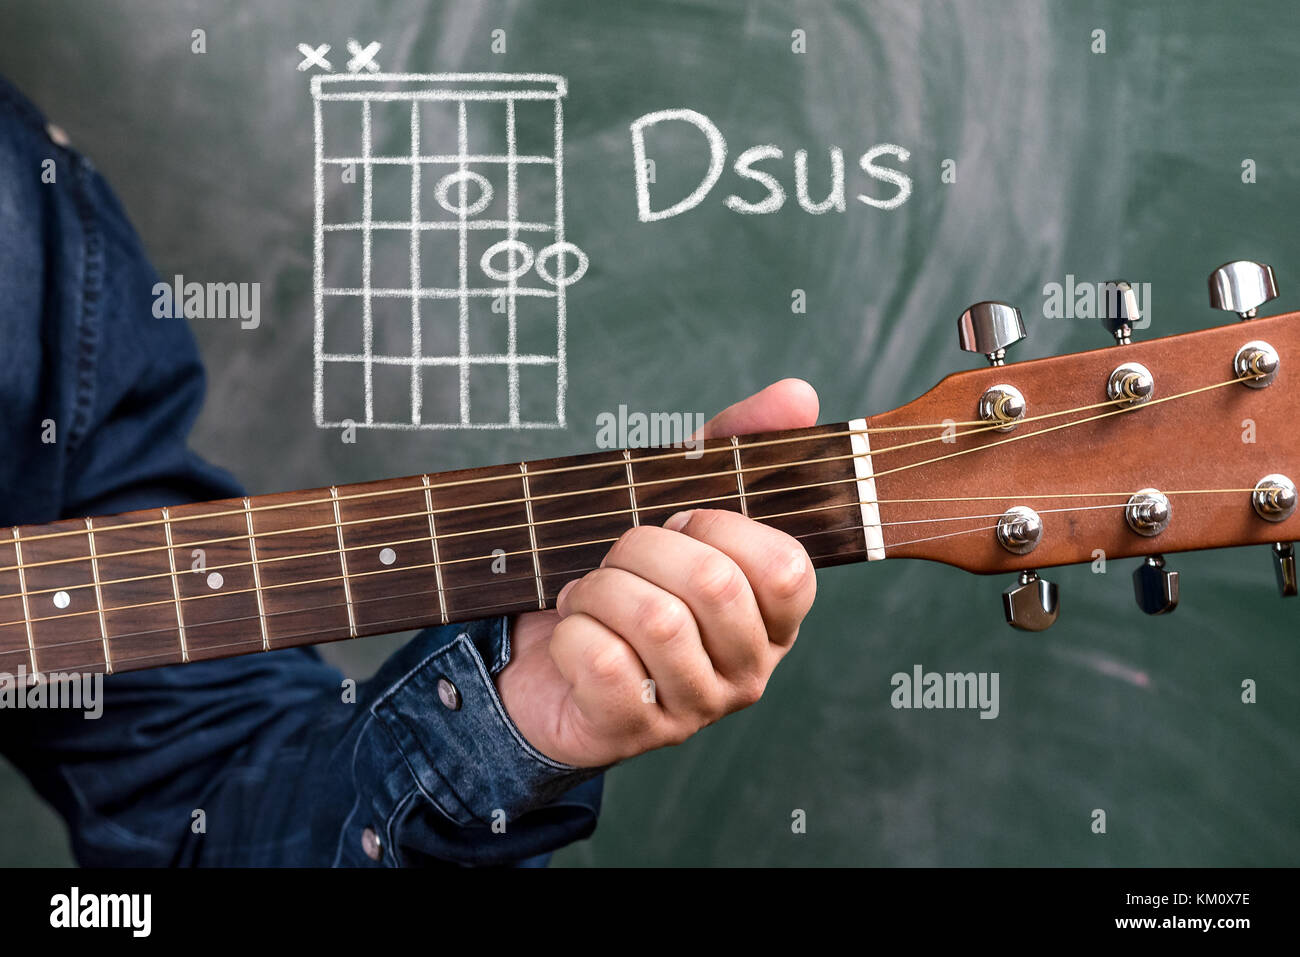 Man in a blue denim shirt playing guitar chords displayed on a blackboard,  Chord Dsus Stock Photo - Alamy